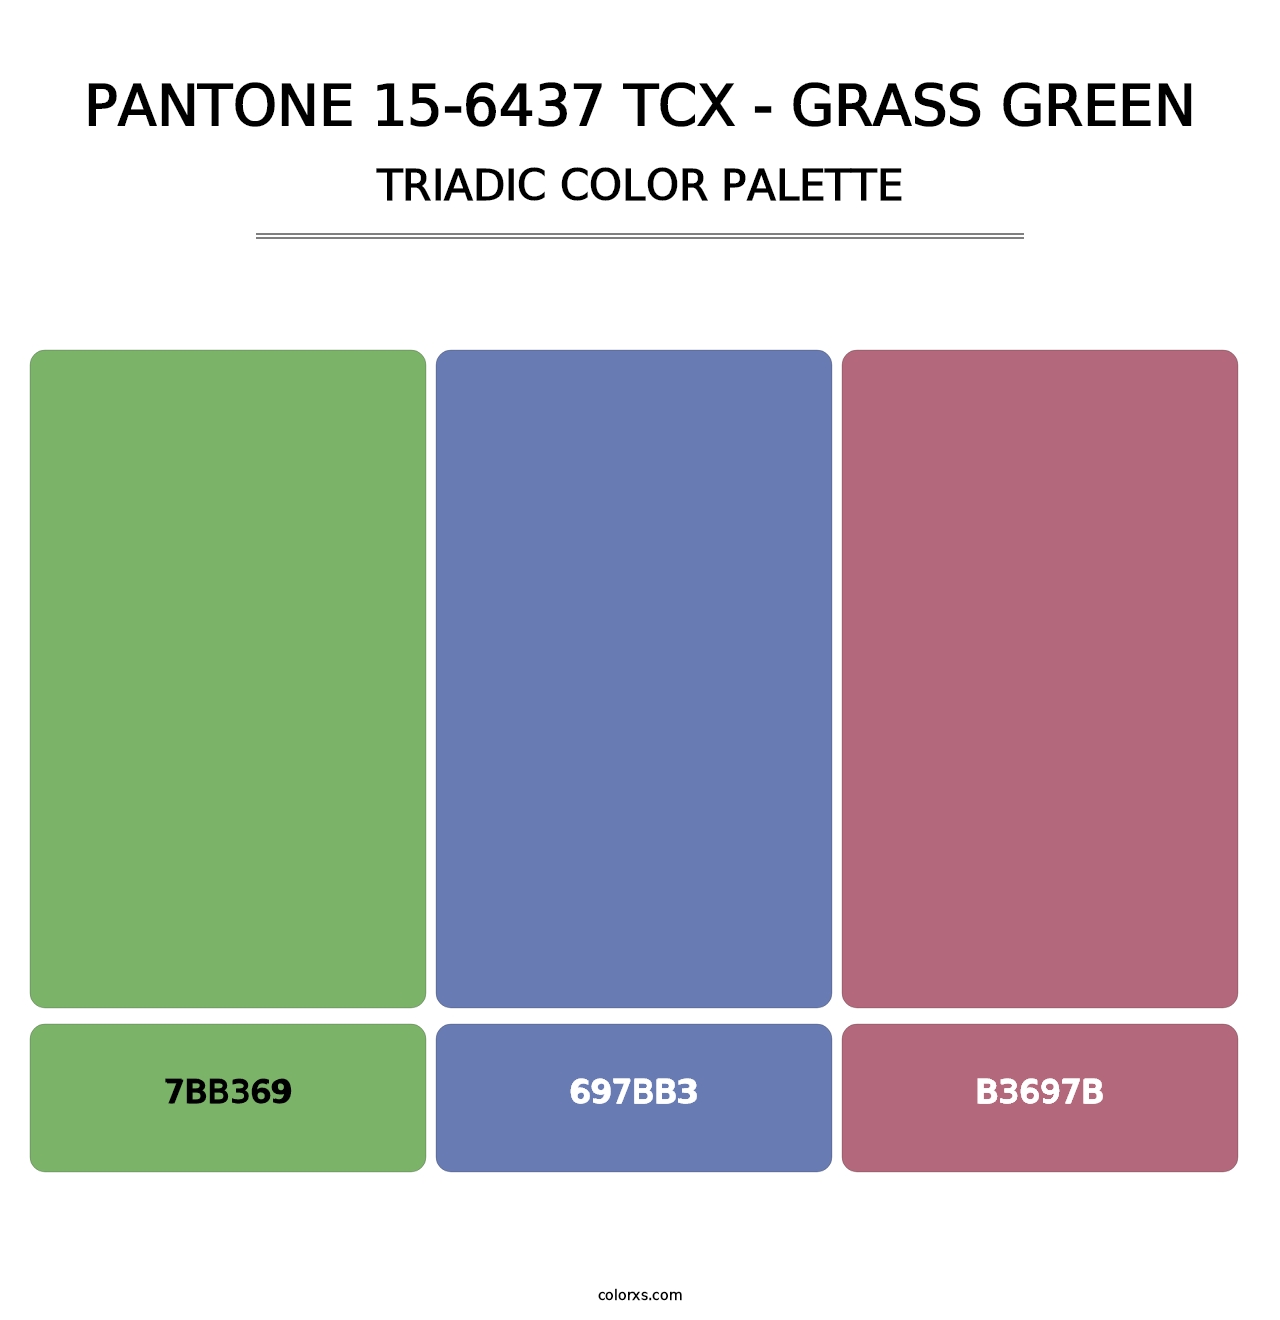 PANTONE 15-6437 TCX - Grass Green - Triadic Color Palette